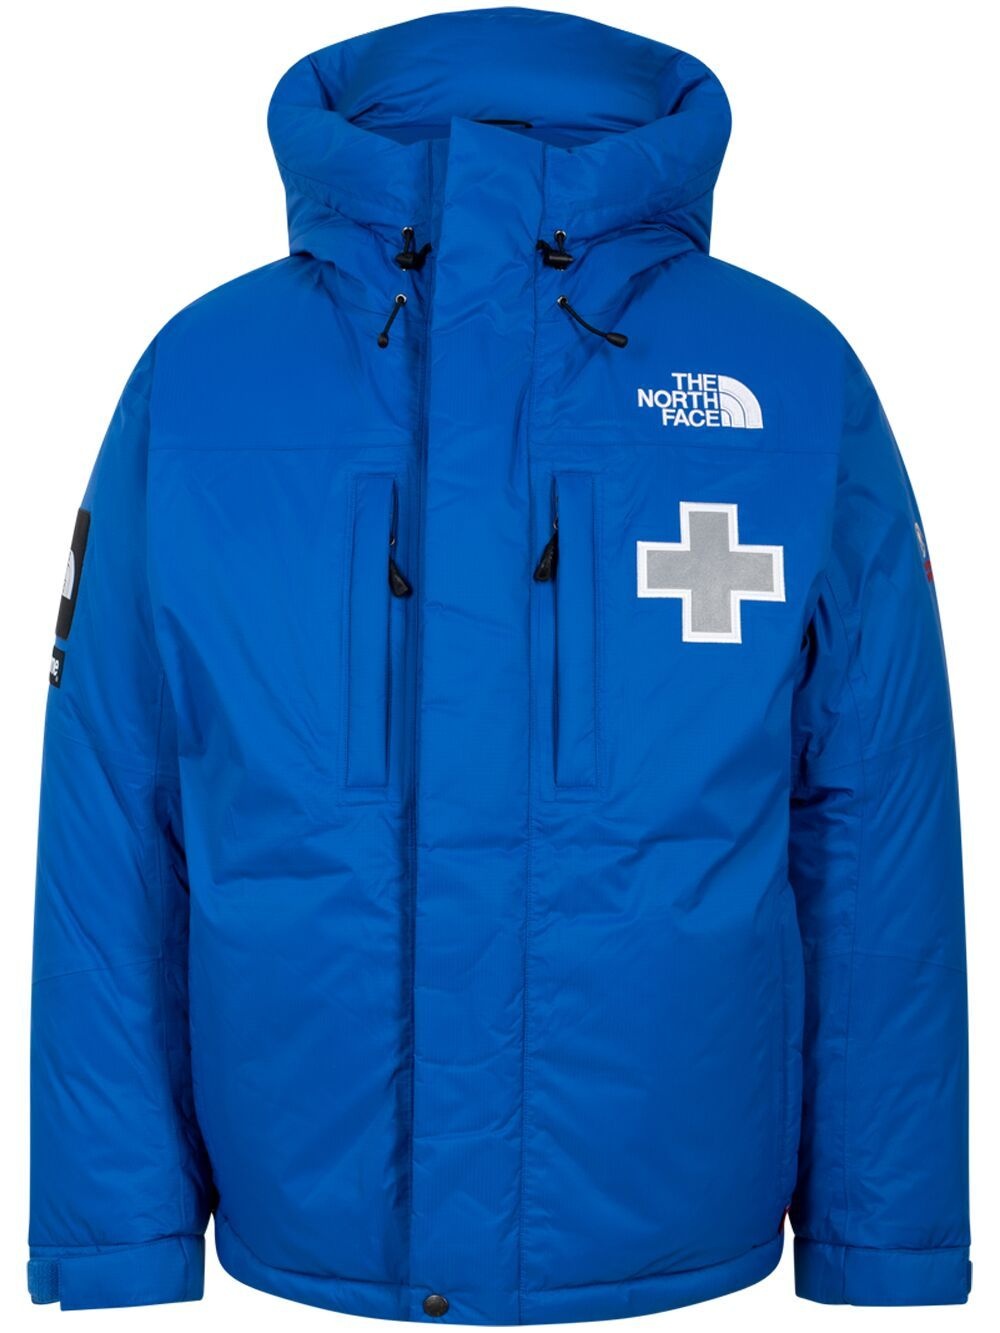 x The North Face Summit Series Rescue Baltoro jacket - 1